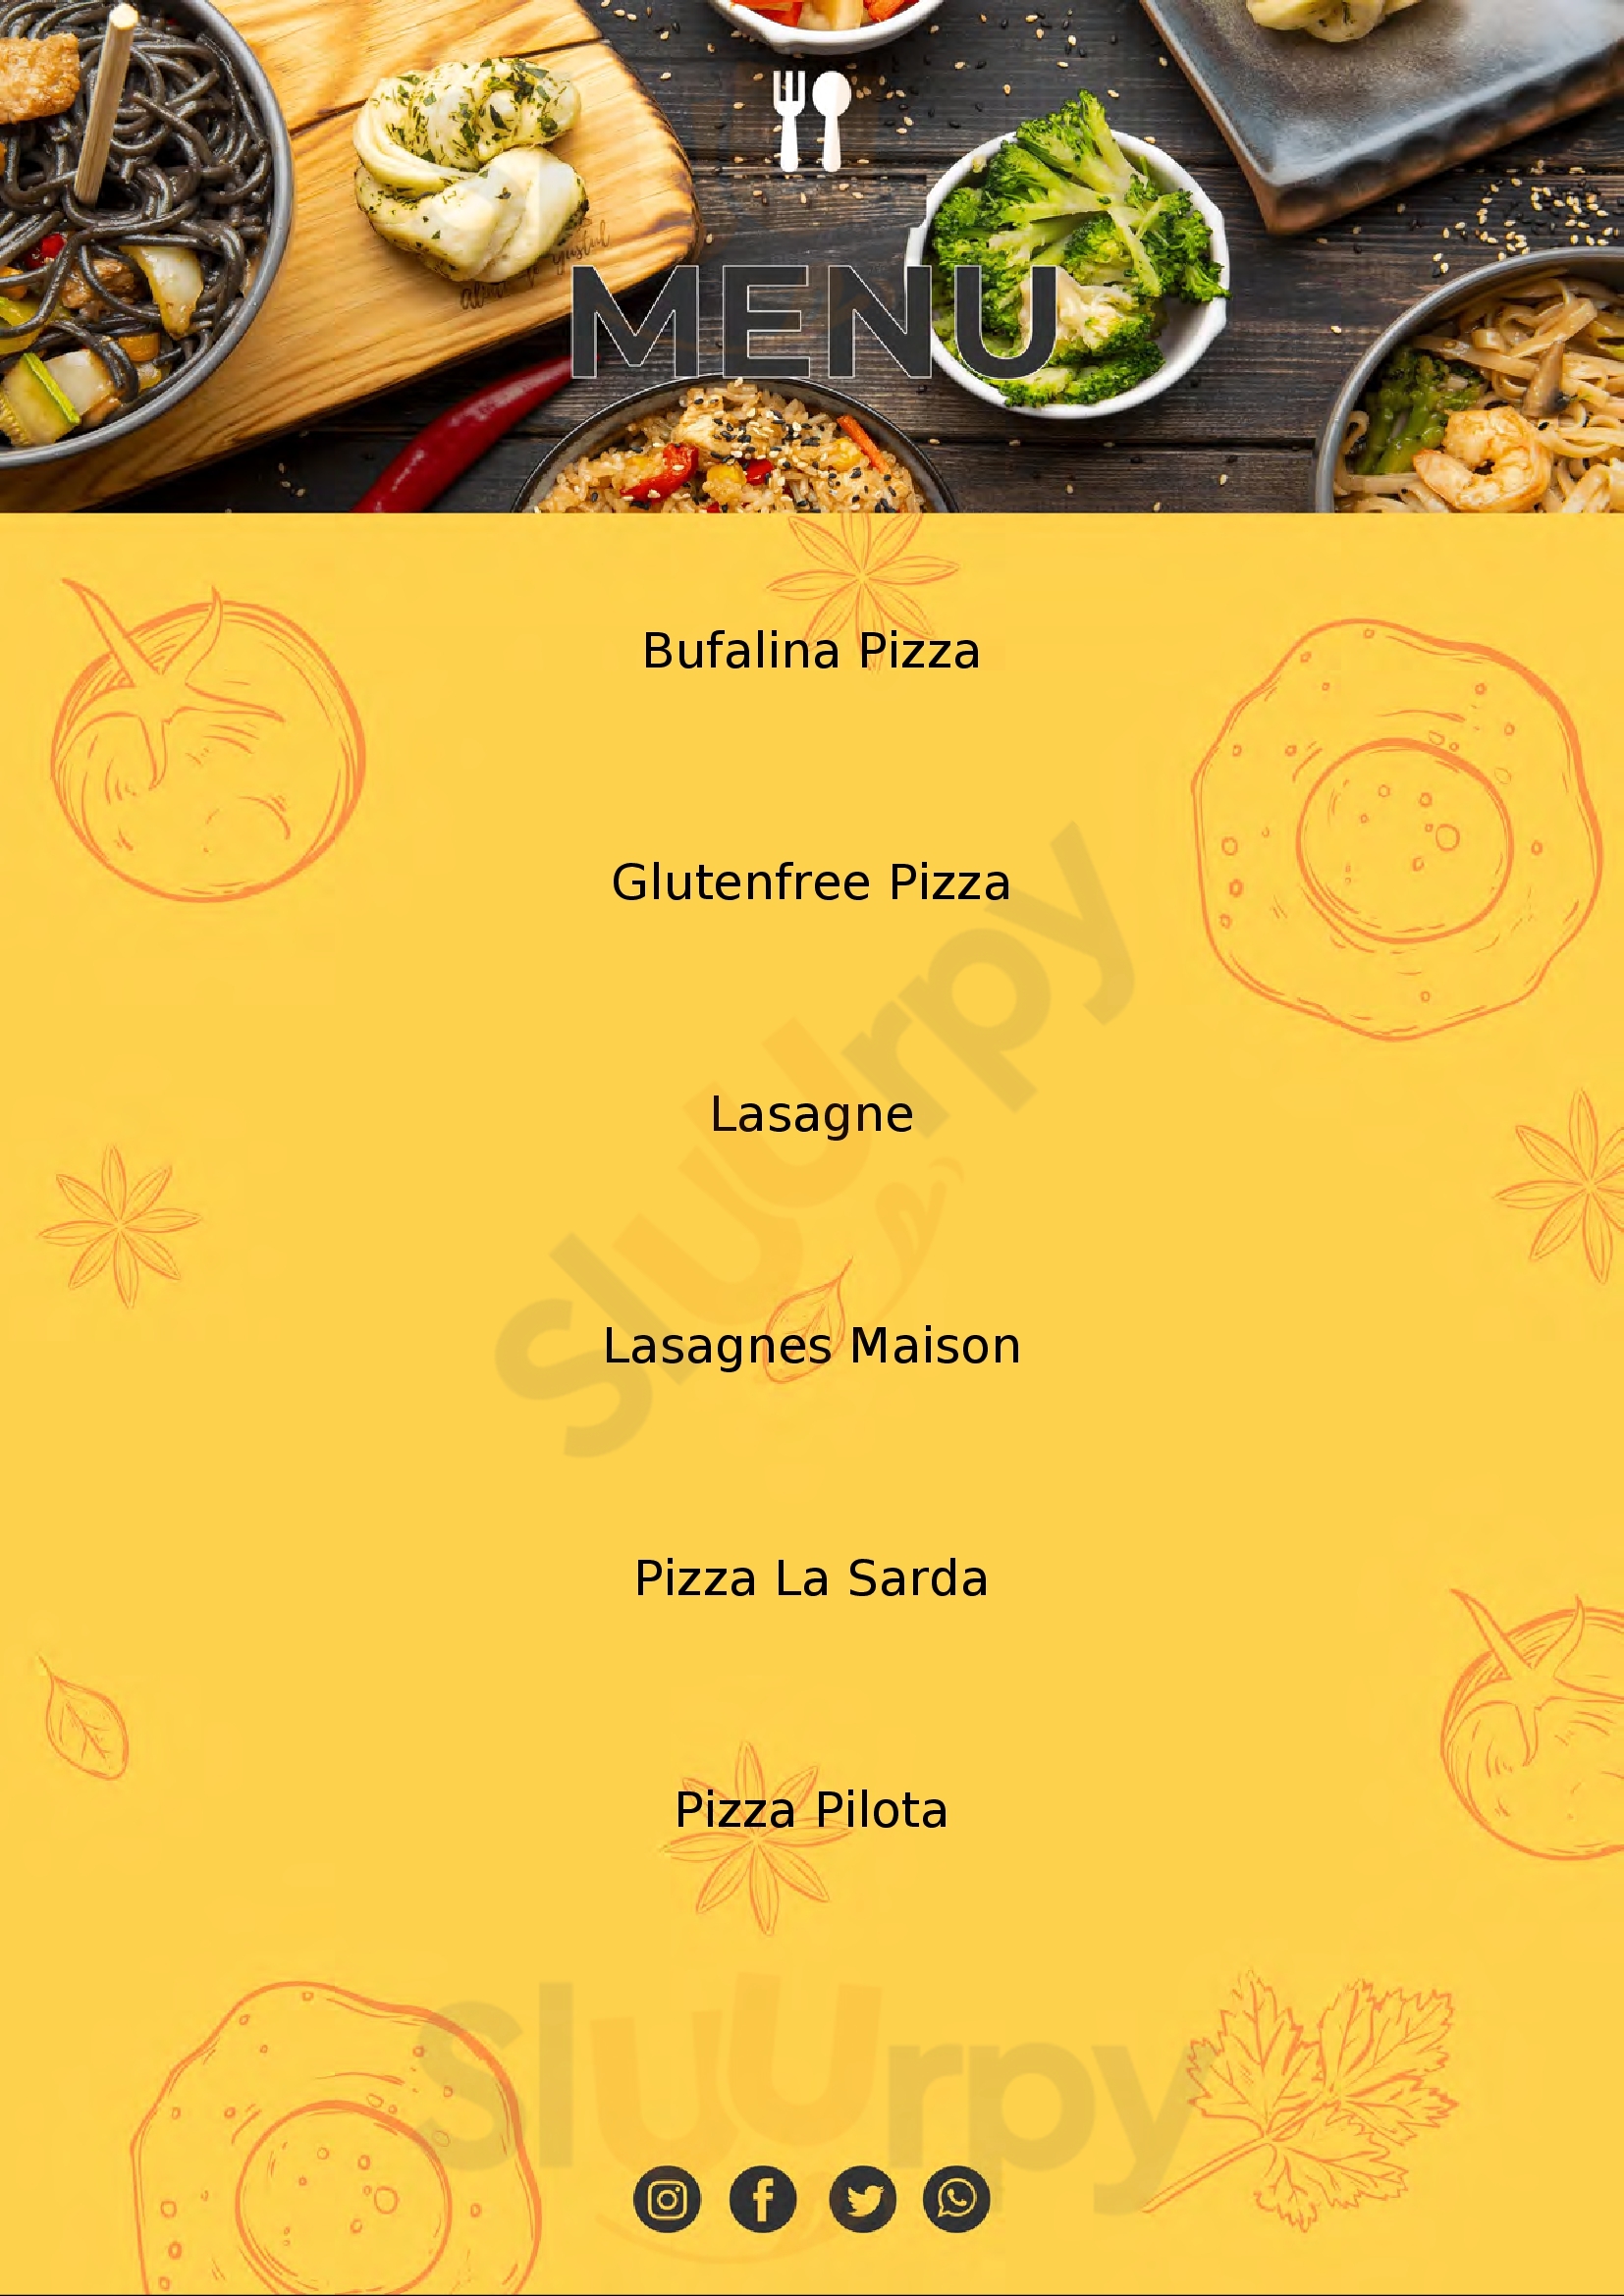 Spano's Pizza & Bistrot Santa Teresa Gallura menù 1 pagina